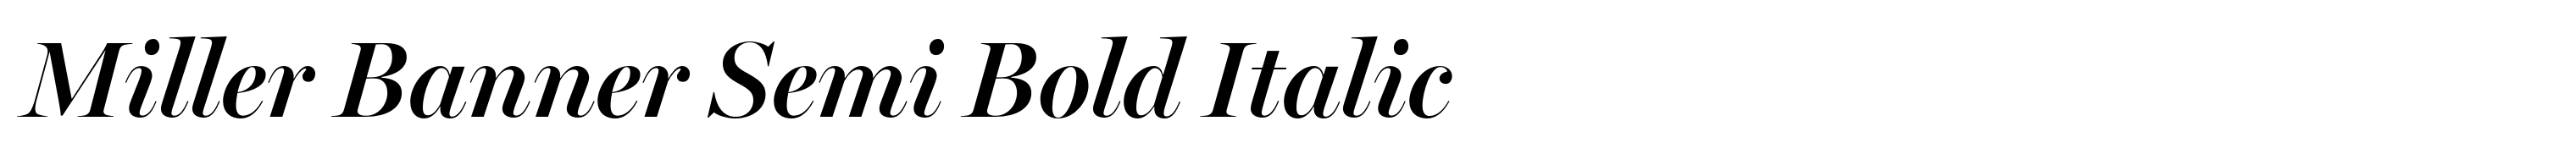 Miller Banner Semi Bold Italic